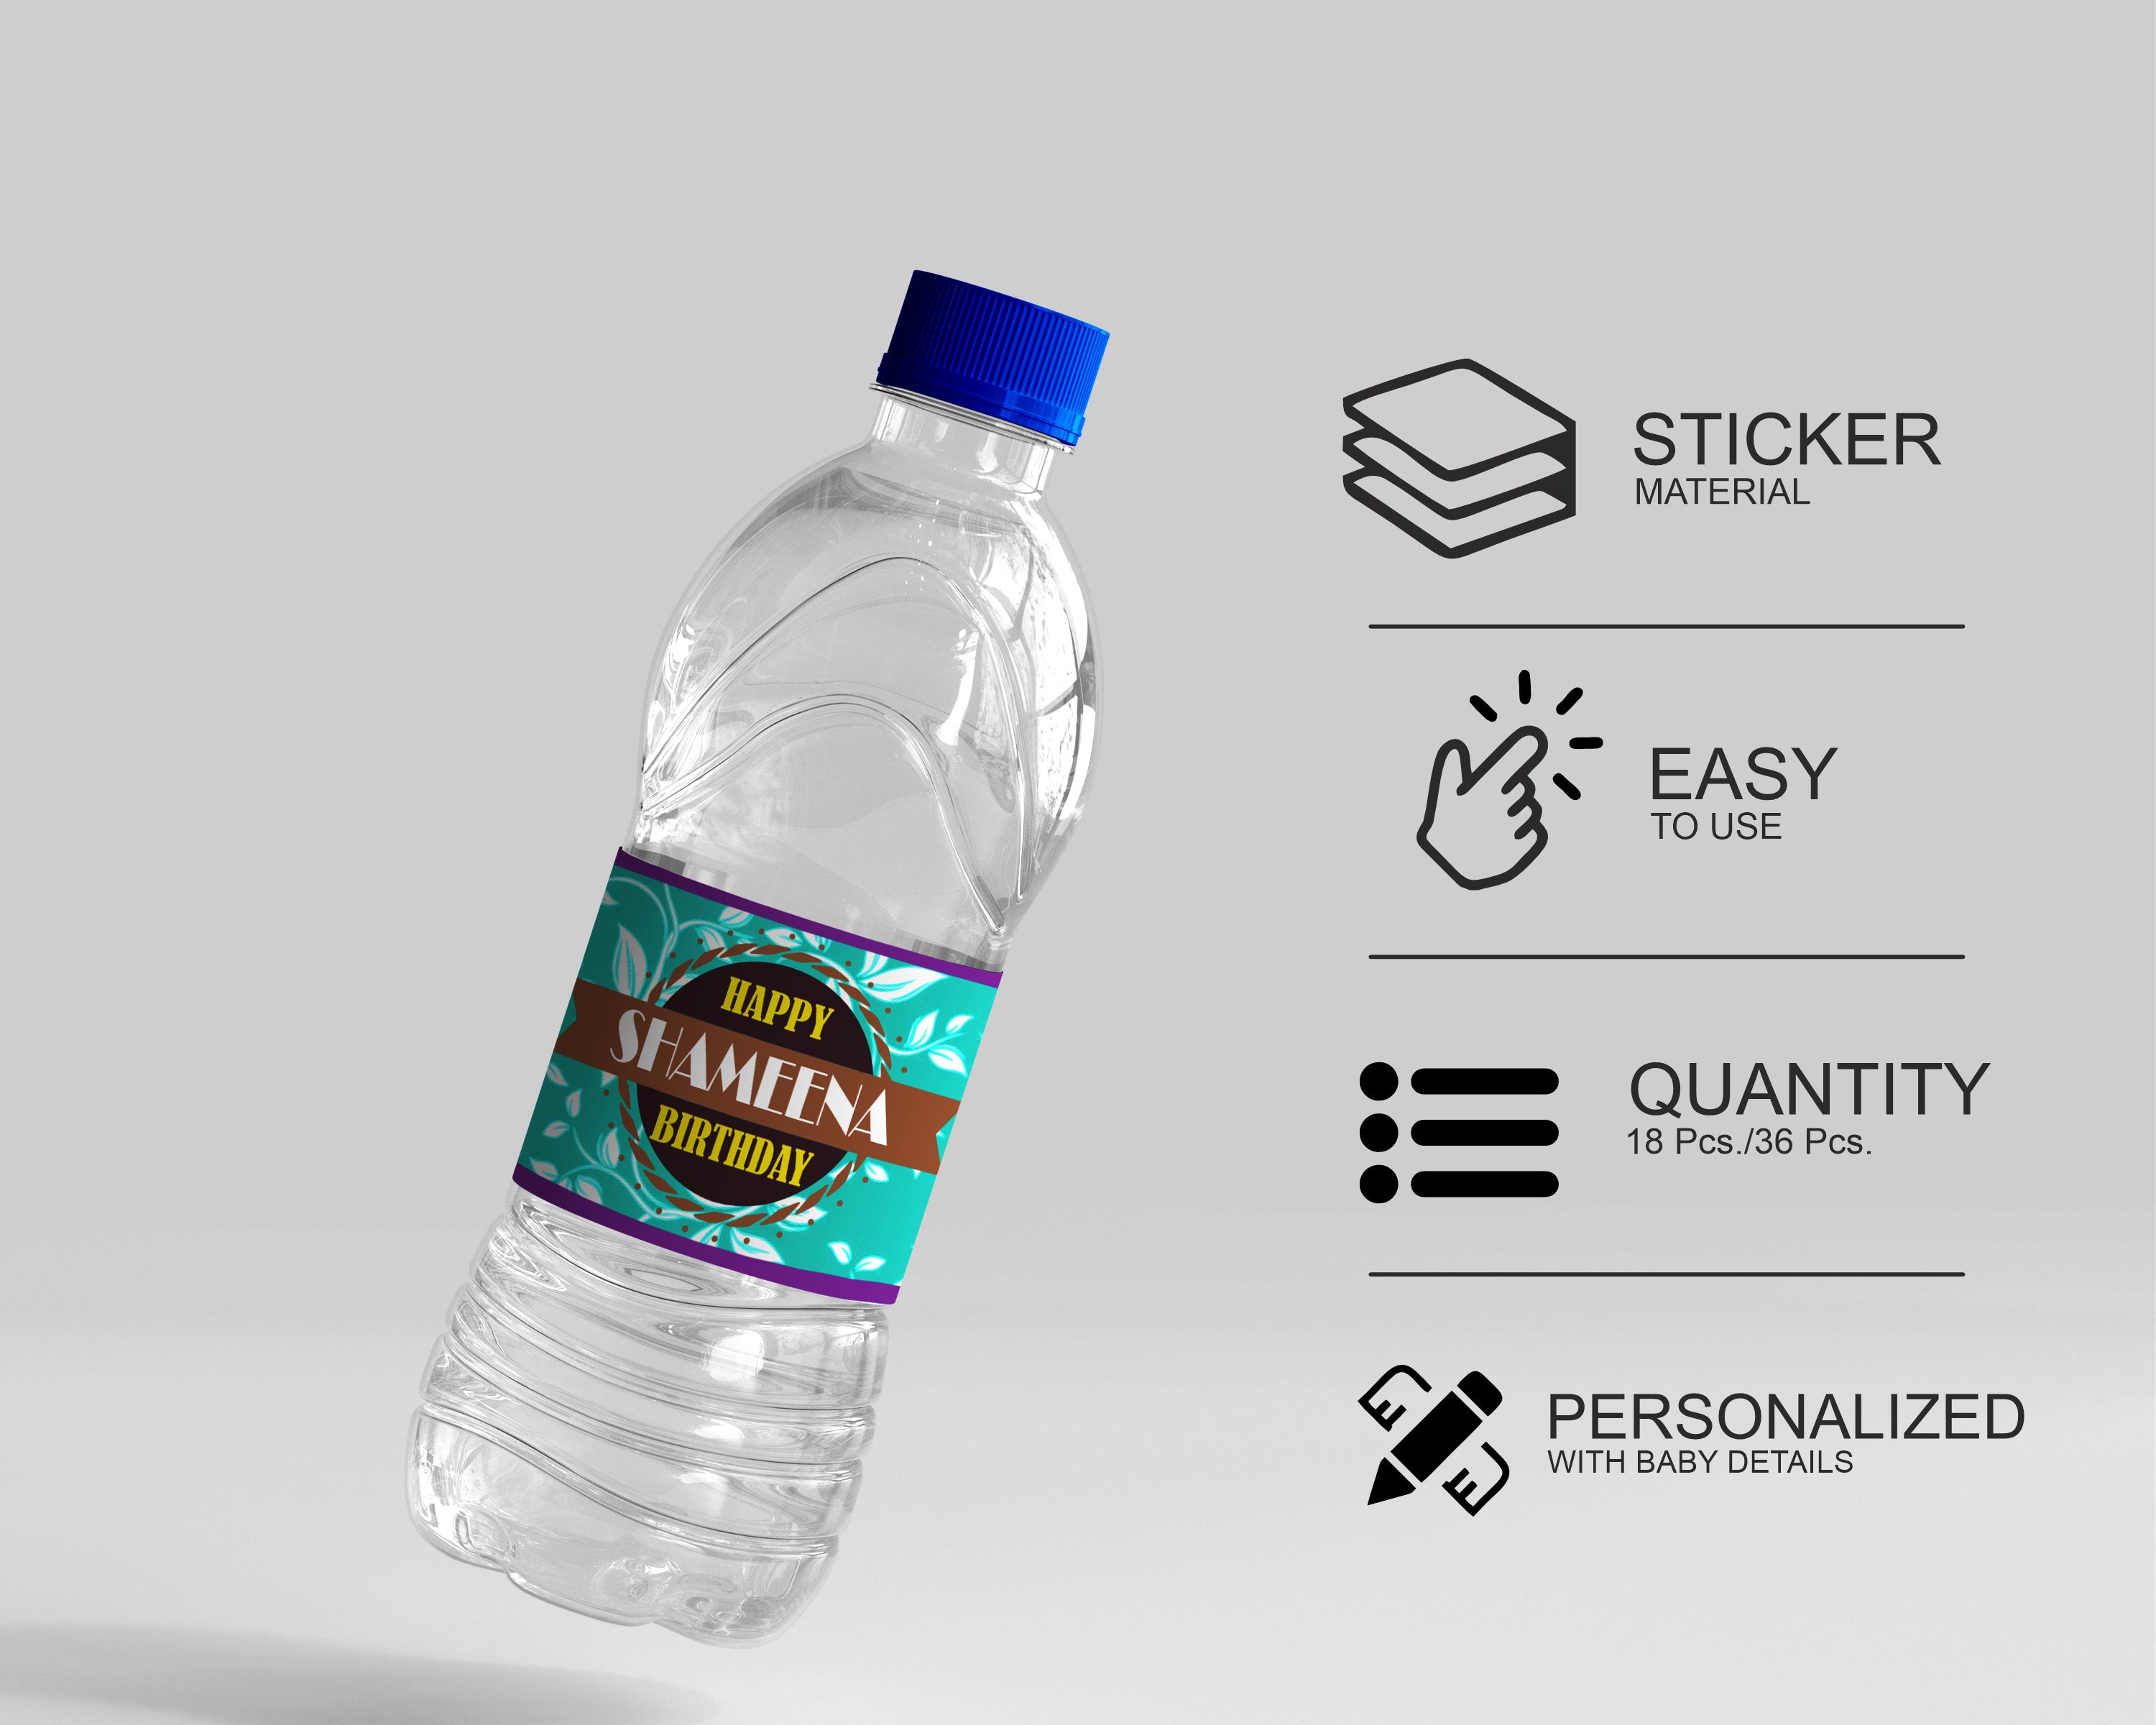 PSI Encanto Theme Water Bottle Stickers